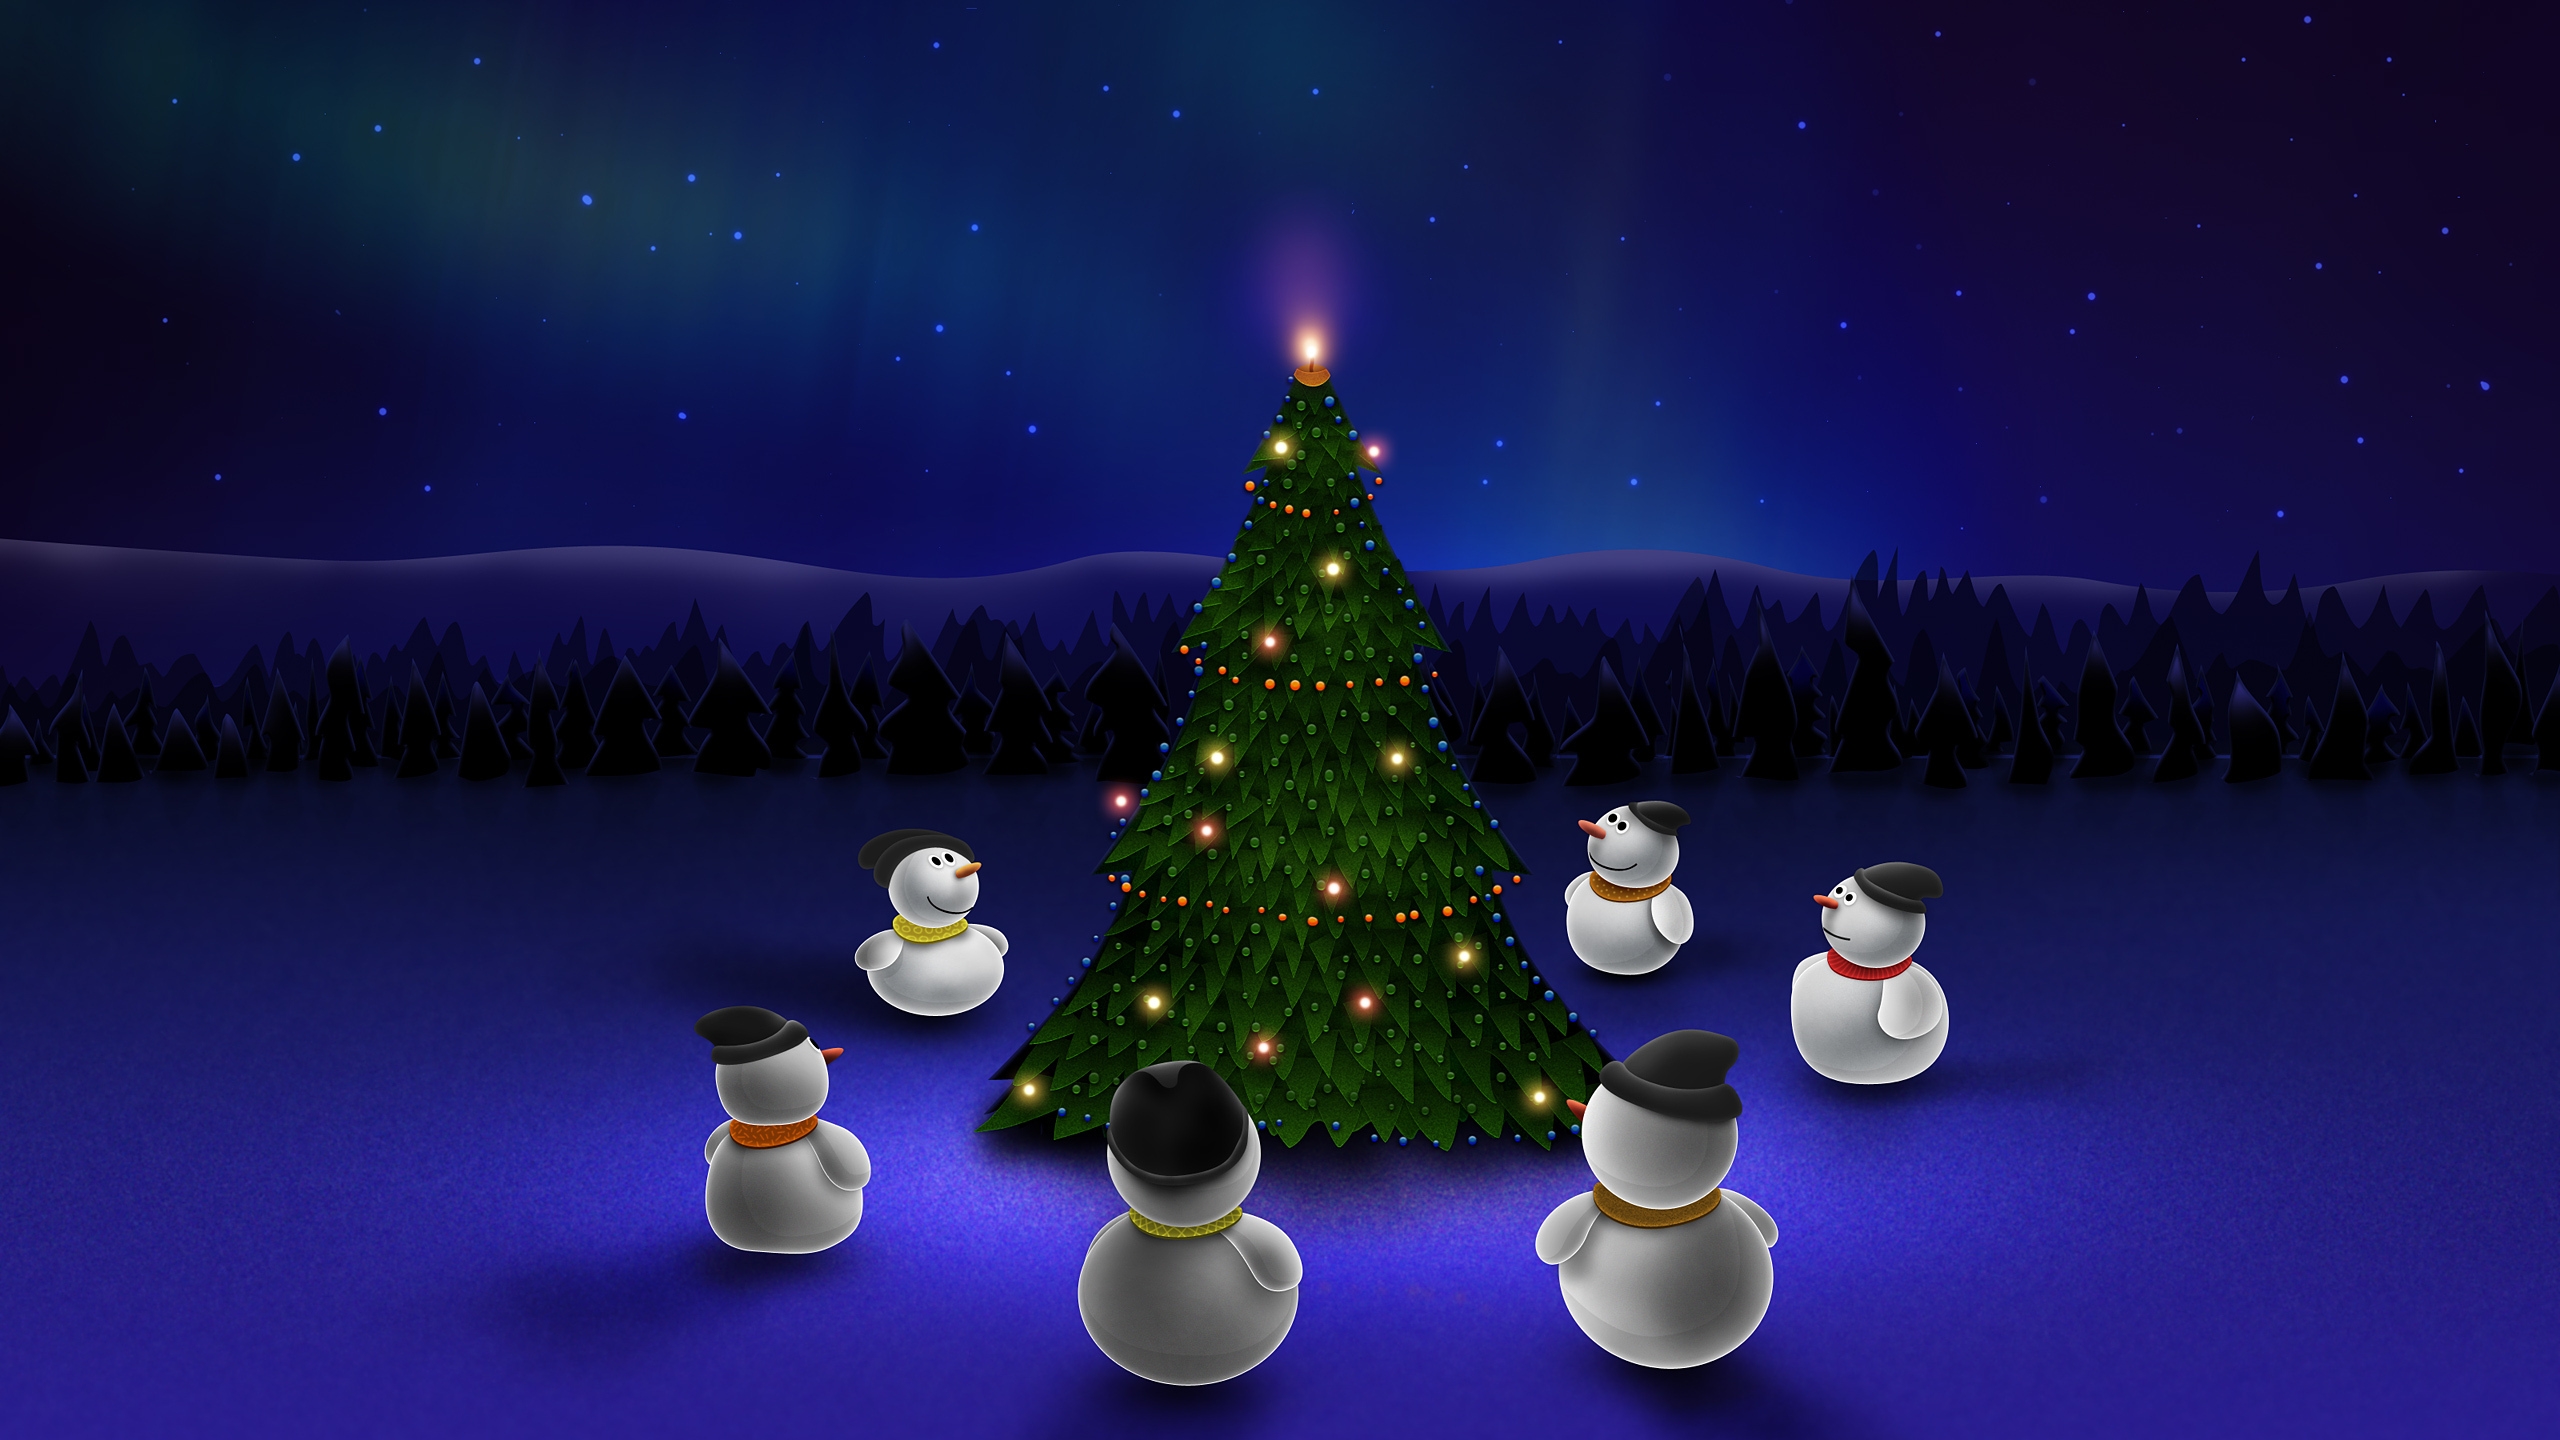 Snowman Around Christmas Tree for 2560x1440 HDTV resolution